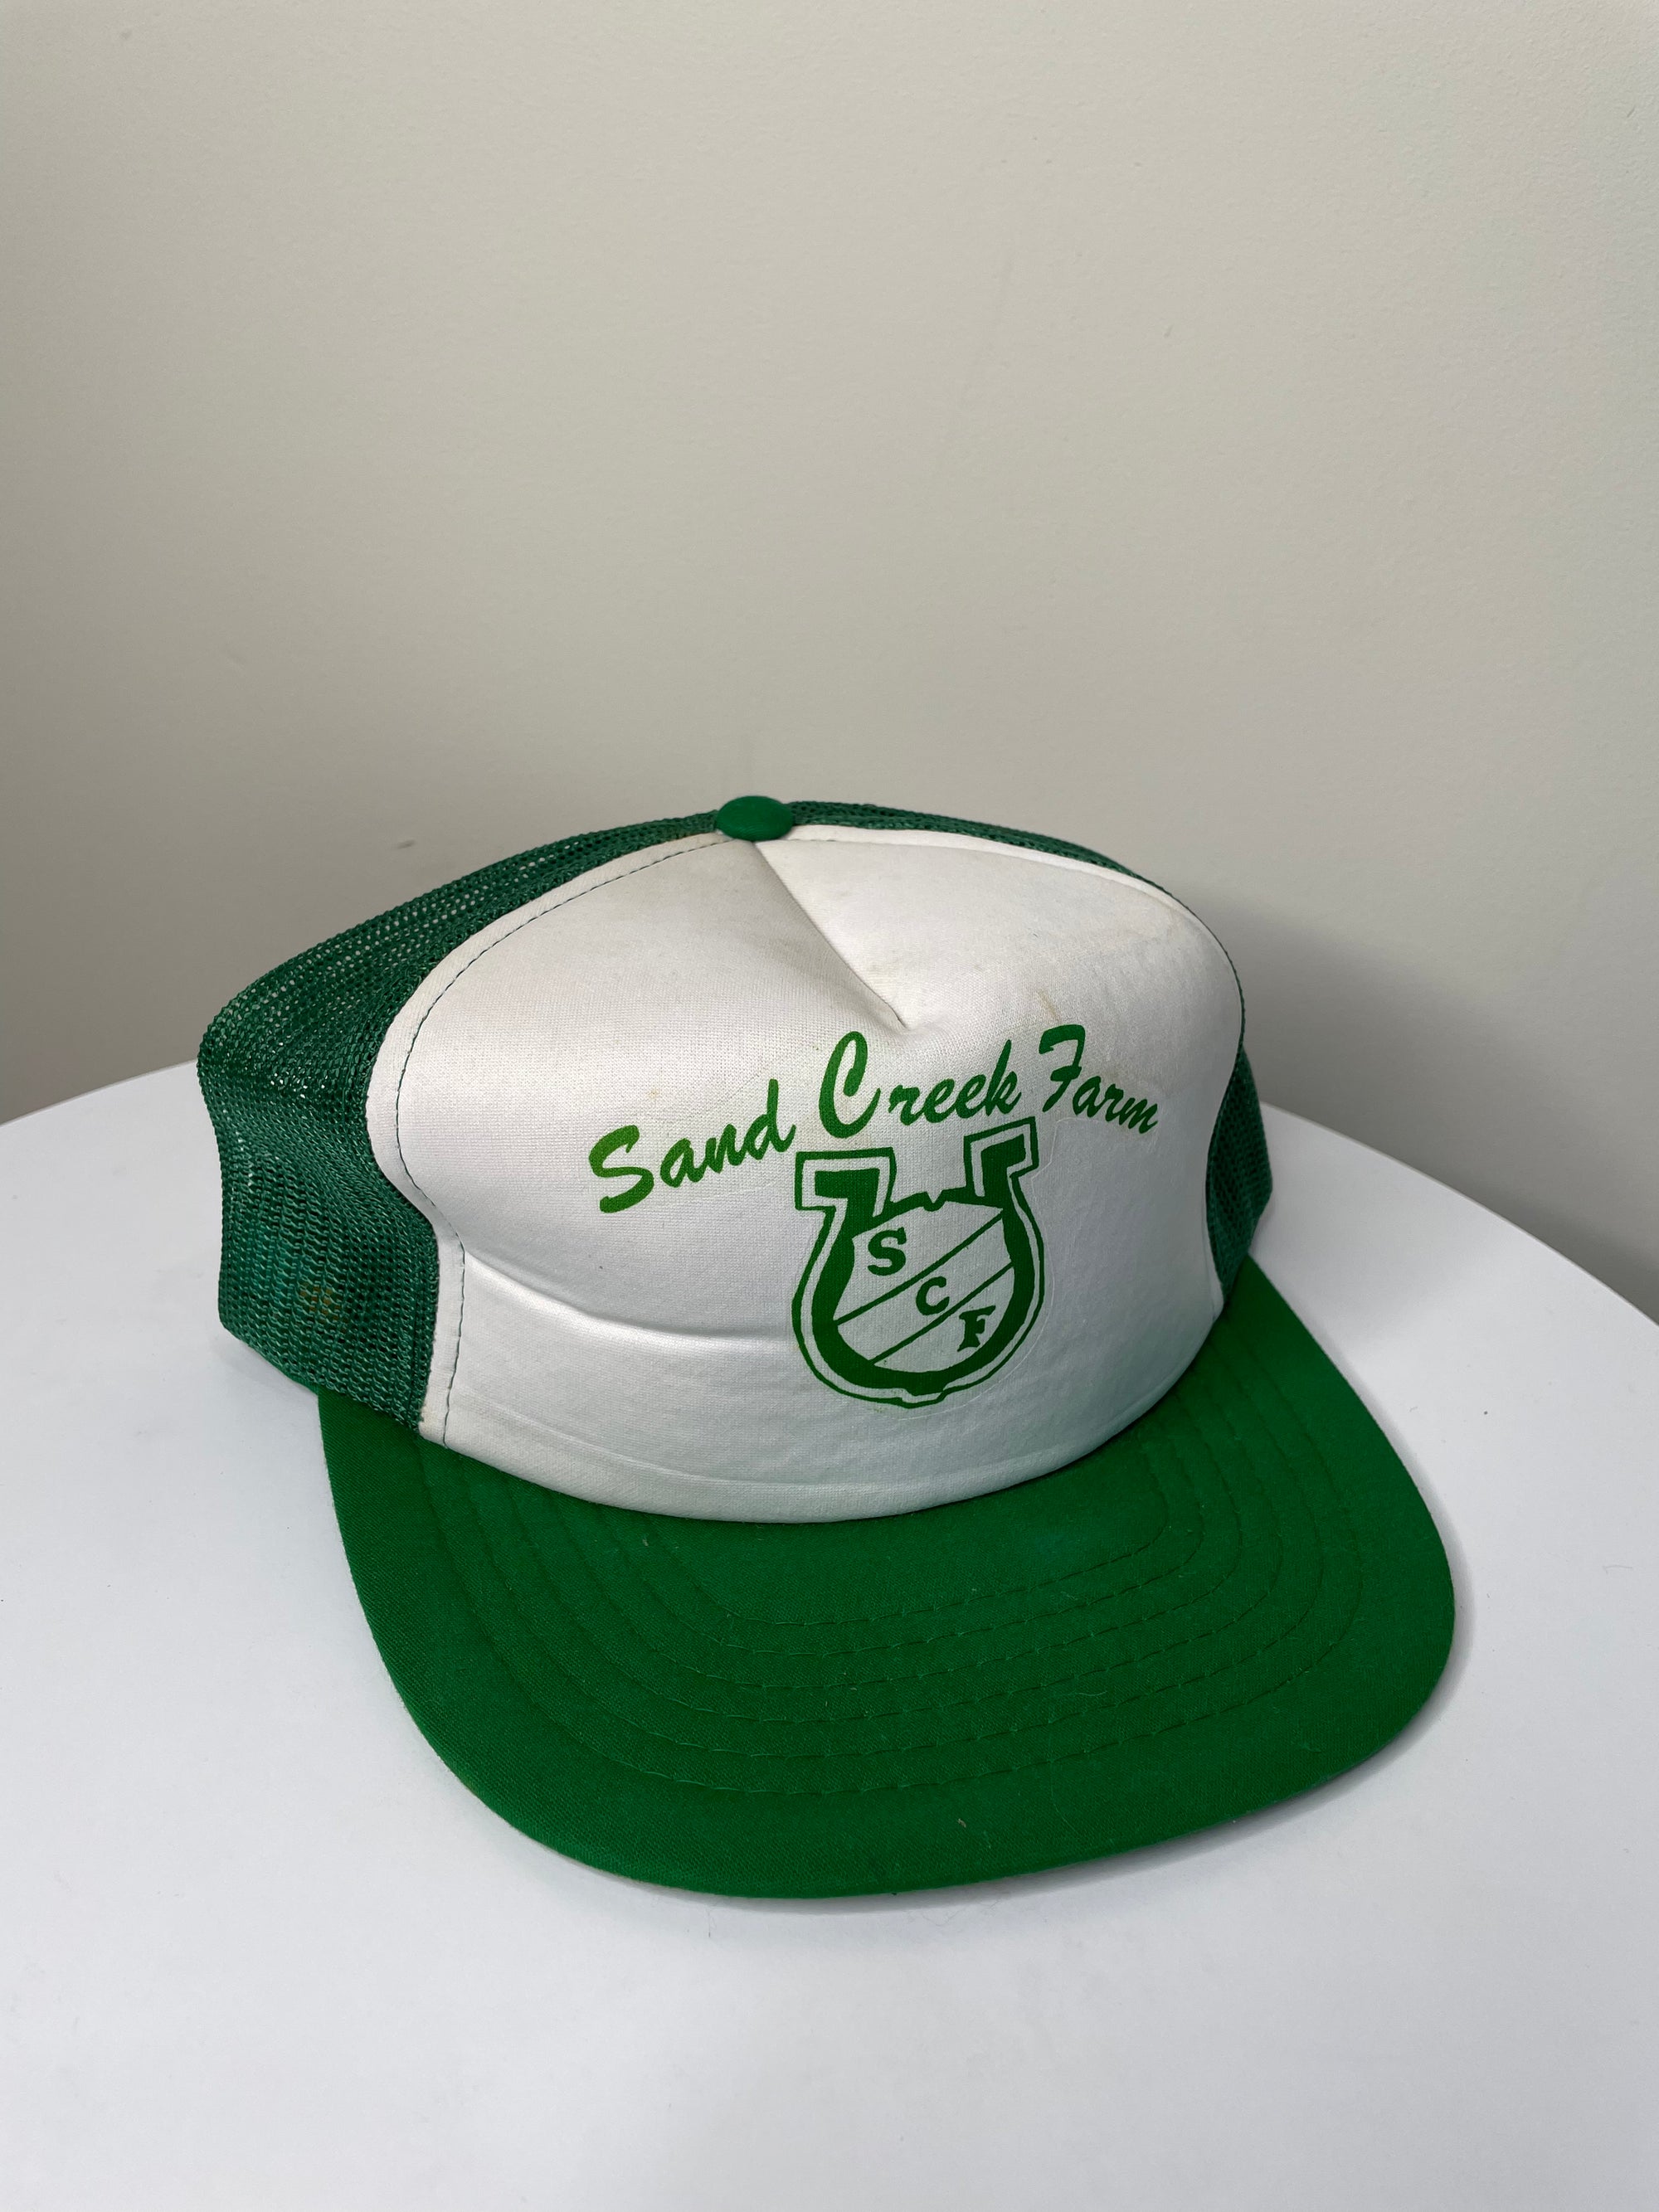 1990s “Sand Creek Farm” Trucker Hat